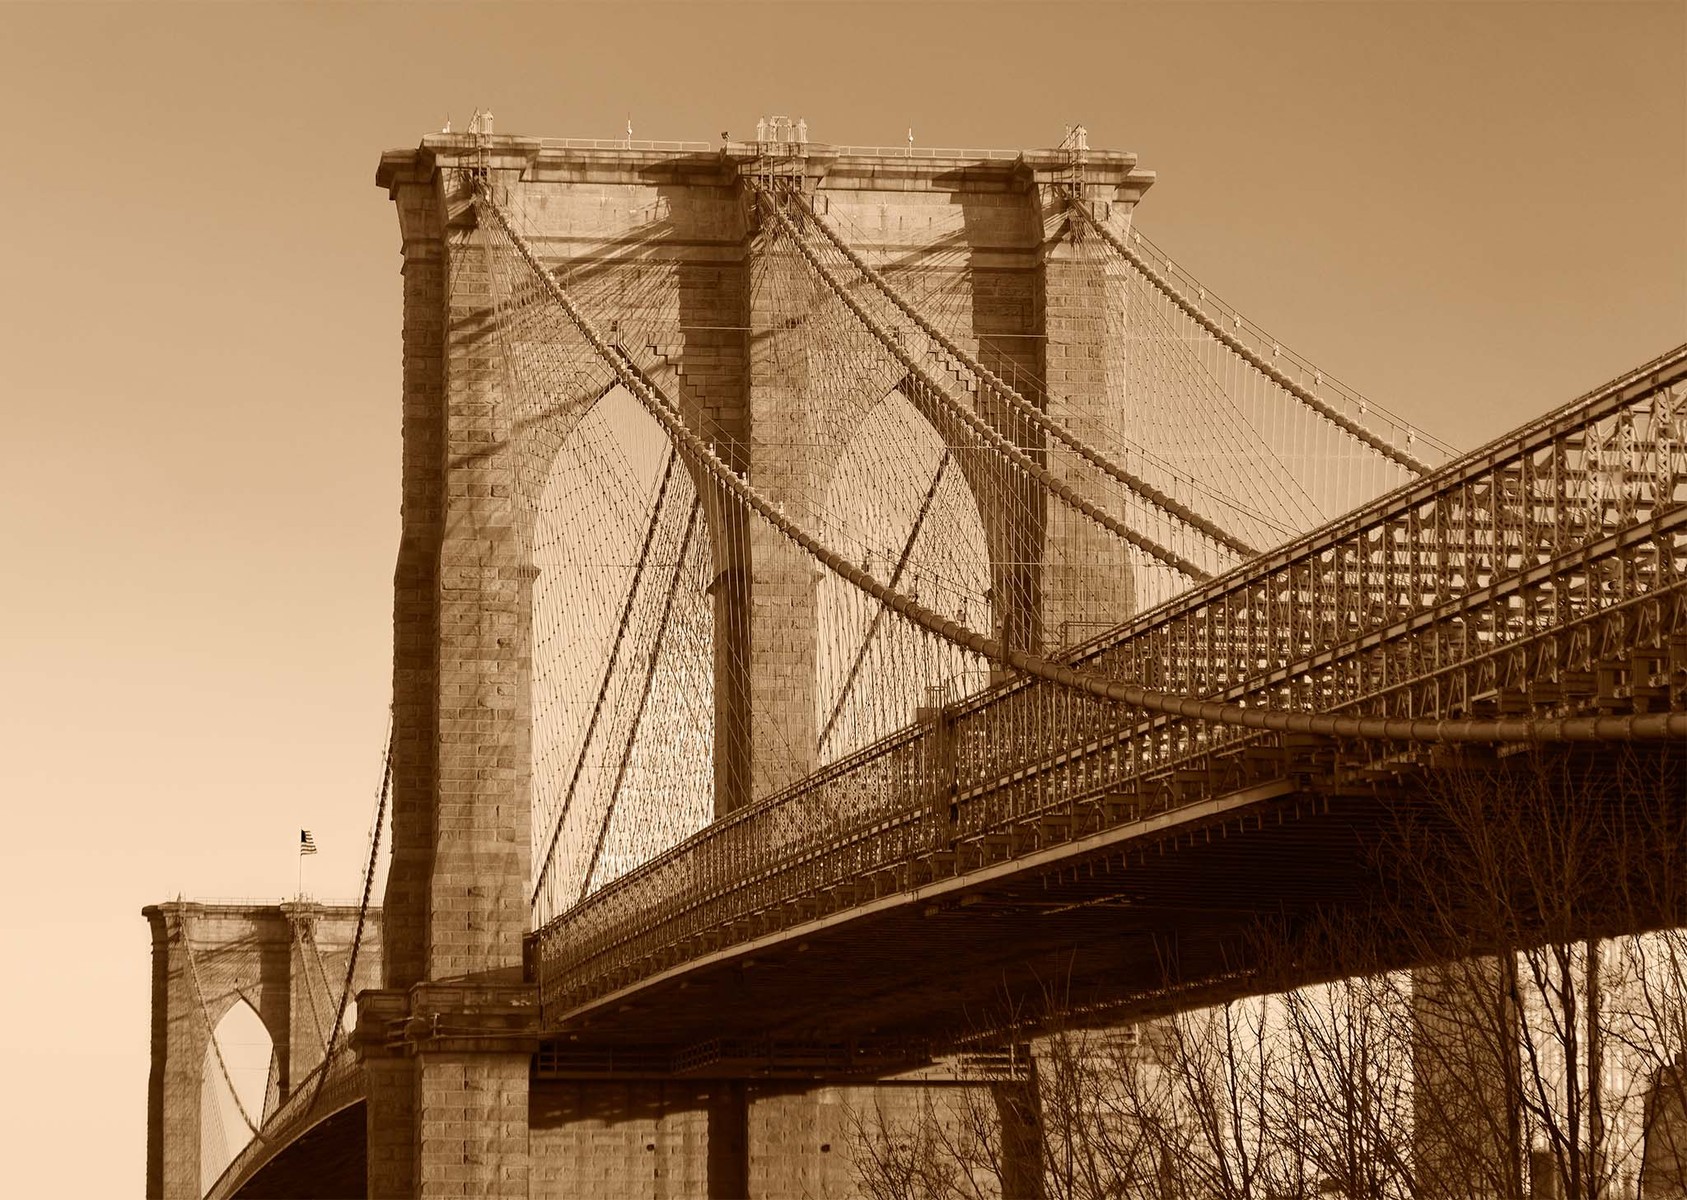 Brooklyn Bridge from Brooklyn looking towards Manhattan